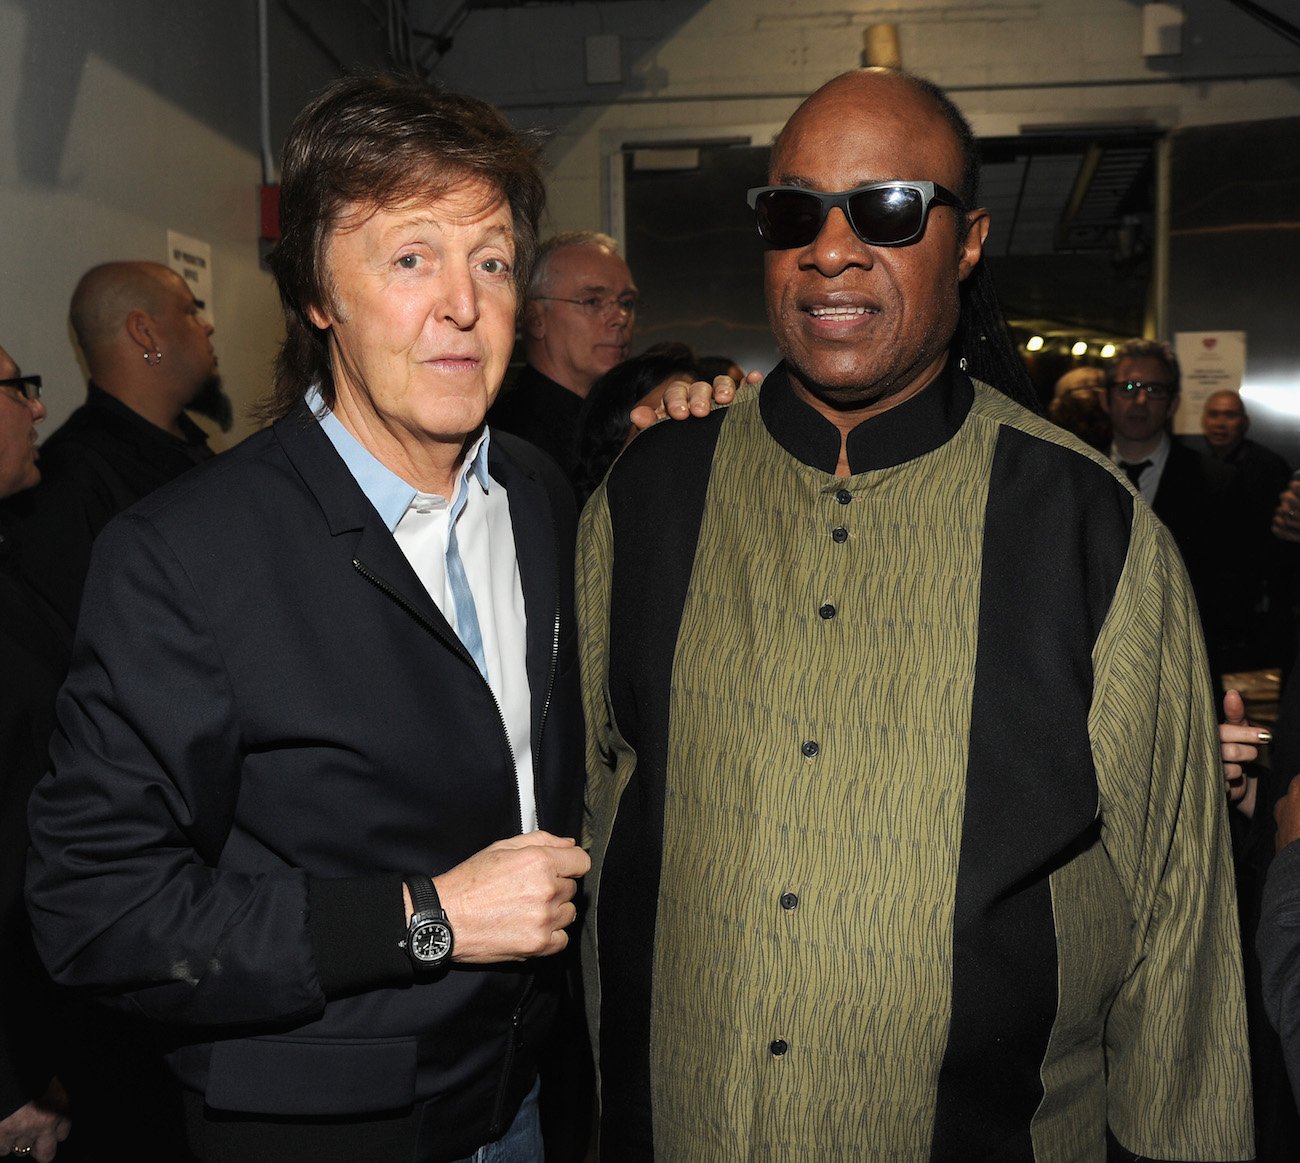 Paul McCartney and Stevie Wonder at the 2014 Grammy Awards.